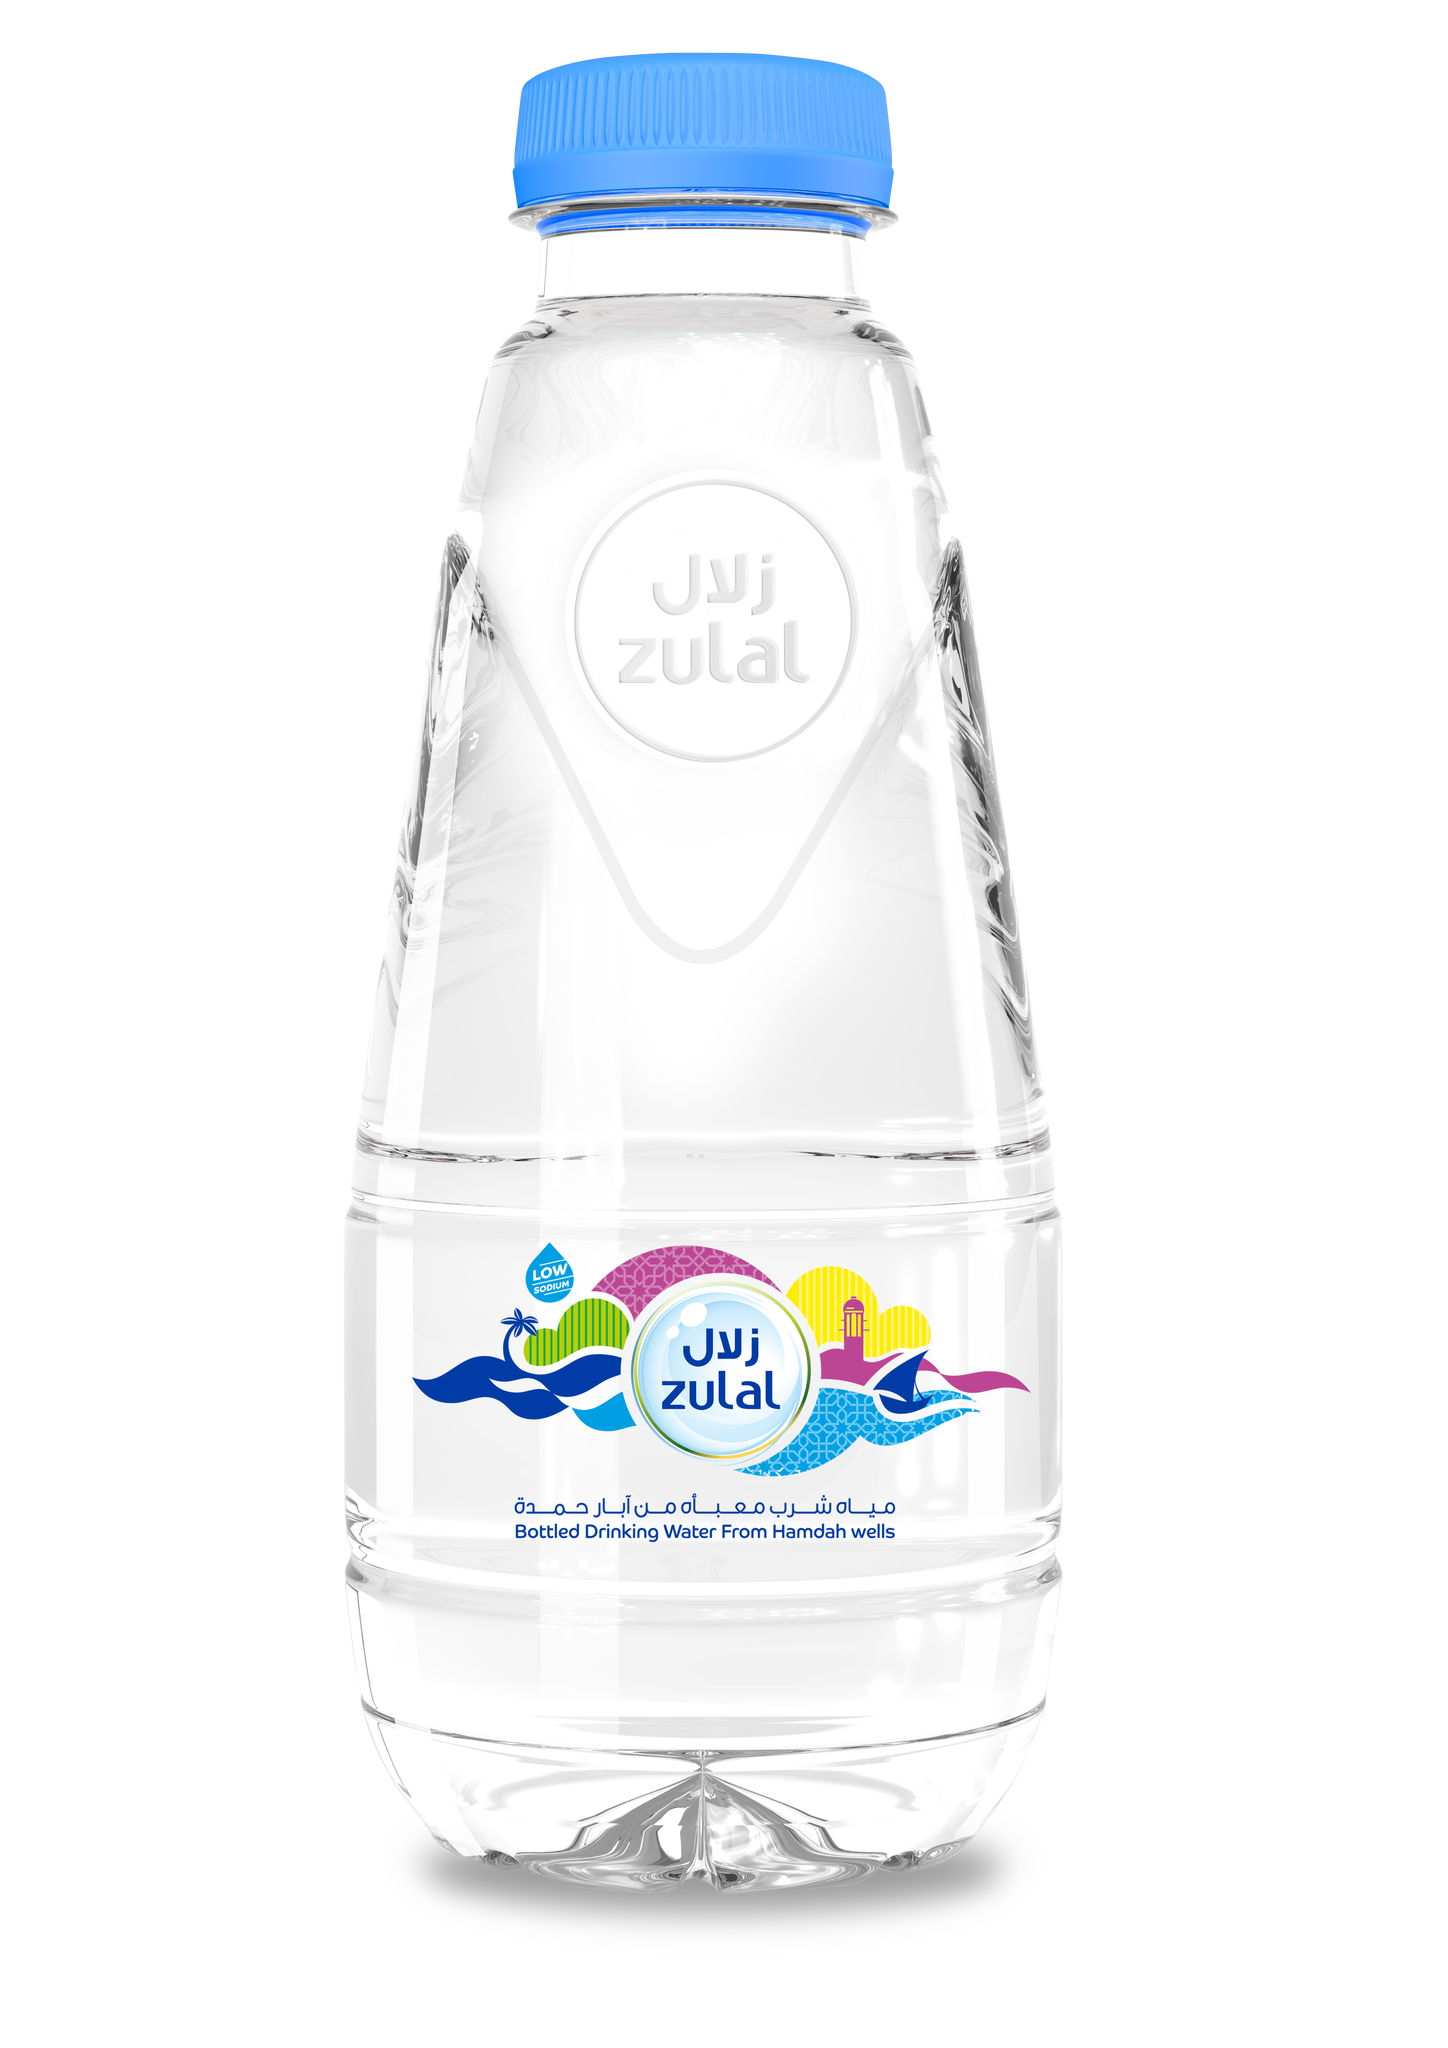 330 ml Water bottle * 24 carton